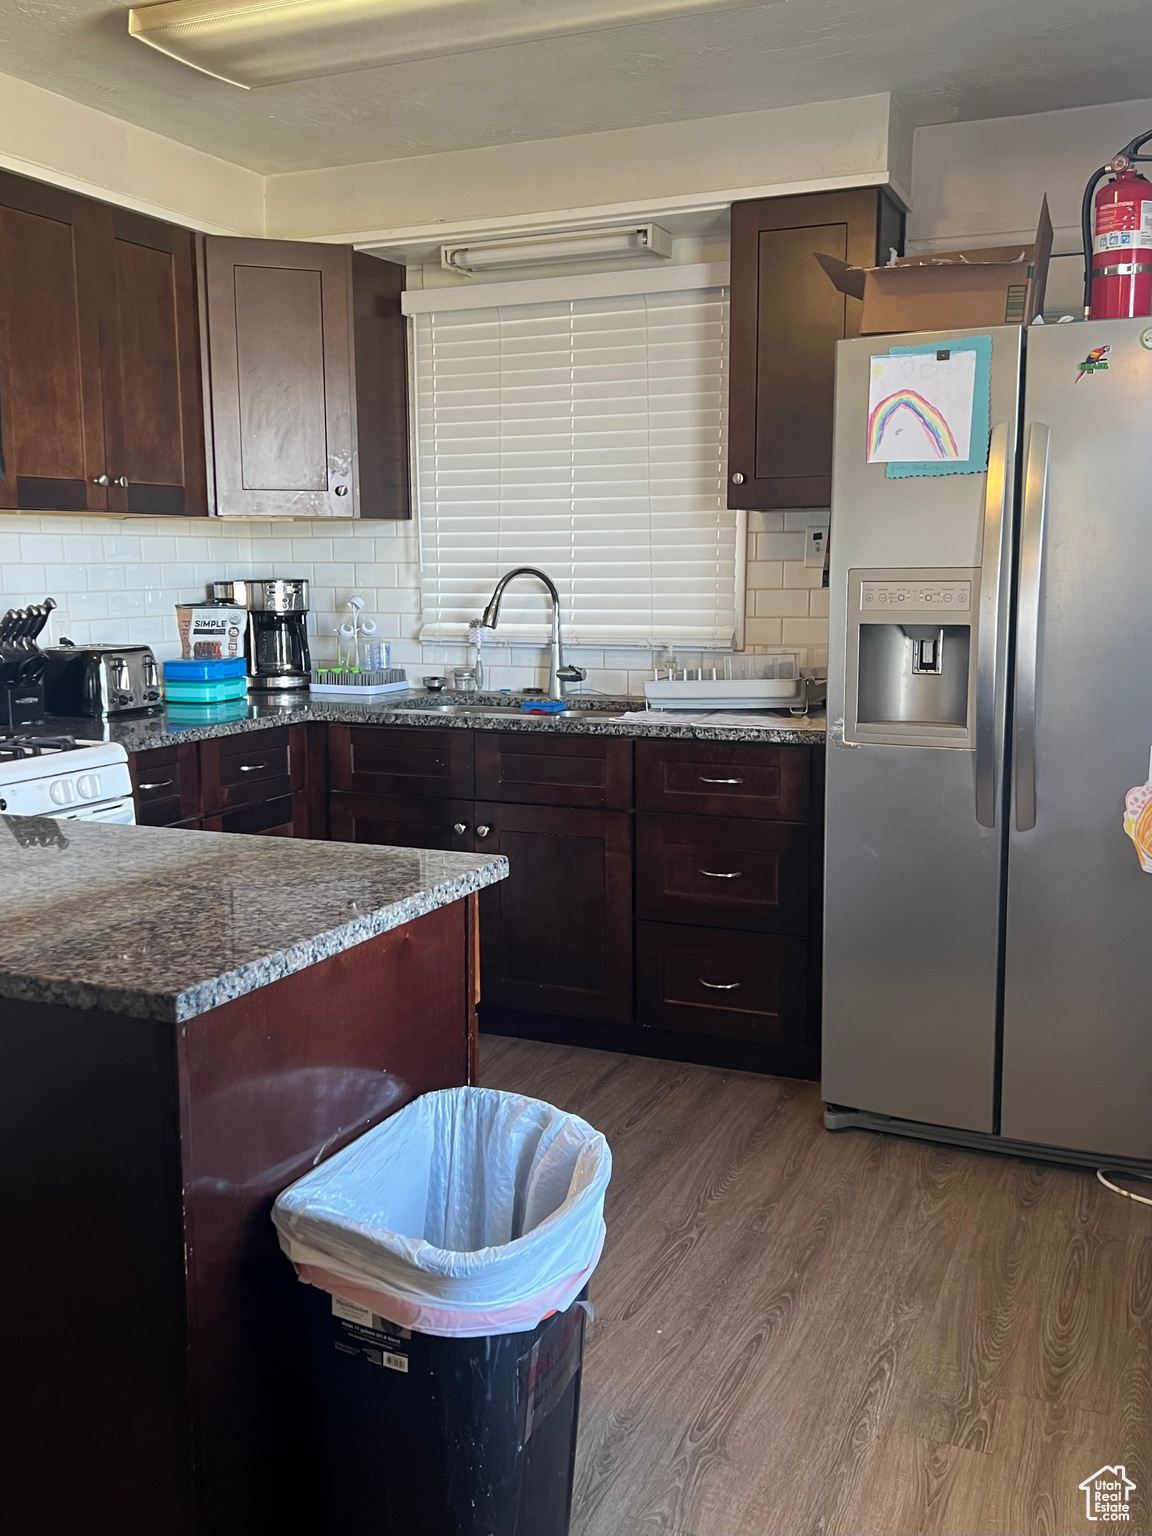 Kitchen featuring hardwood / wood-style flooring, stainless steel fridge, tasteful backsplash, dark stone counters, and sink